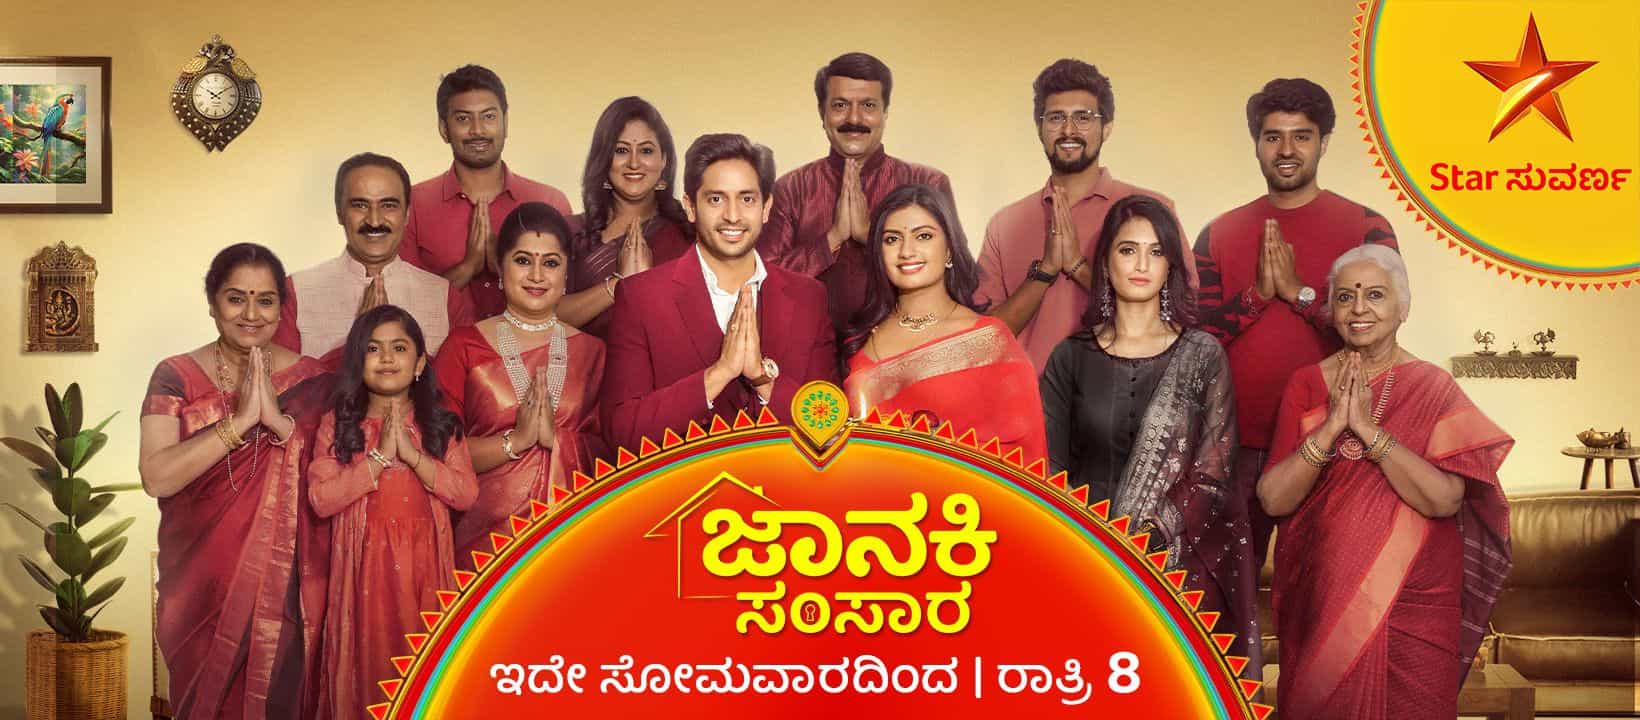 Janaki Samsara Serial Star Cast